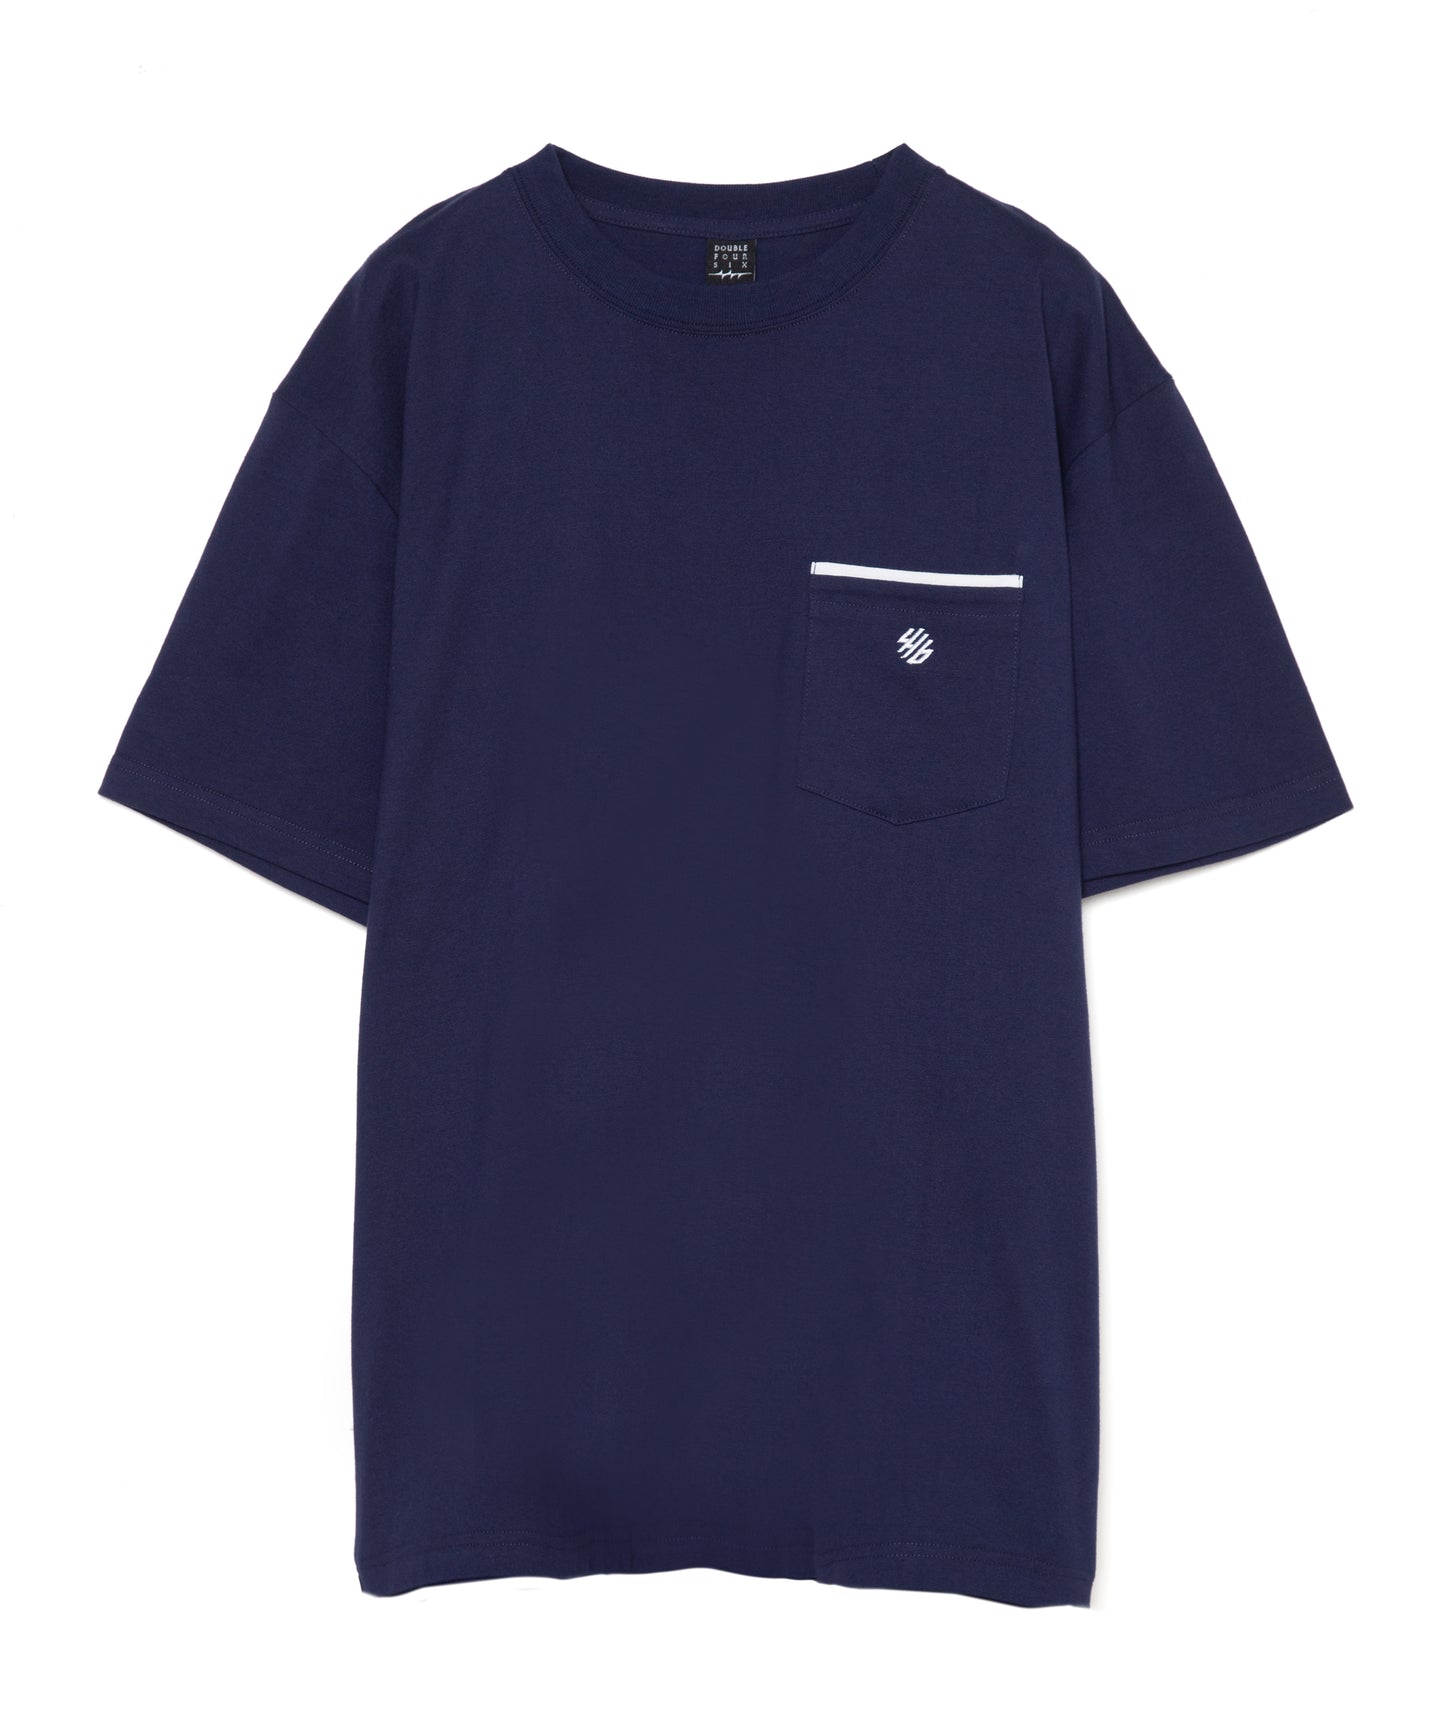 446-Bicolor Pocket T-shirt Navy